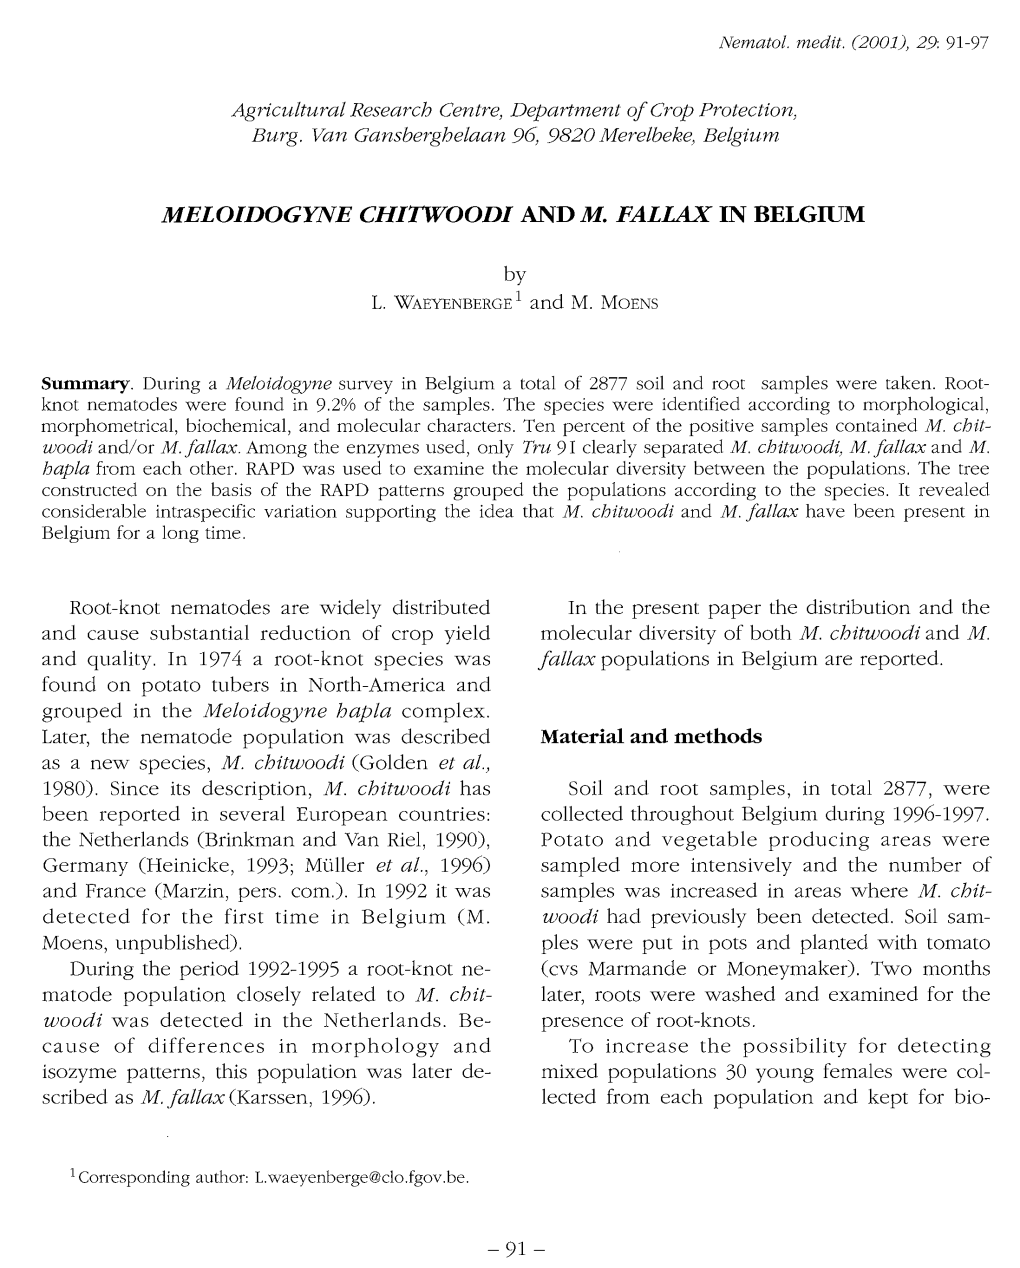 Meloidogyne Chitwoodi and M. Fallax in Belgium